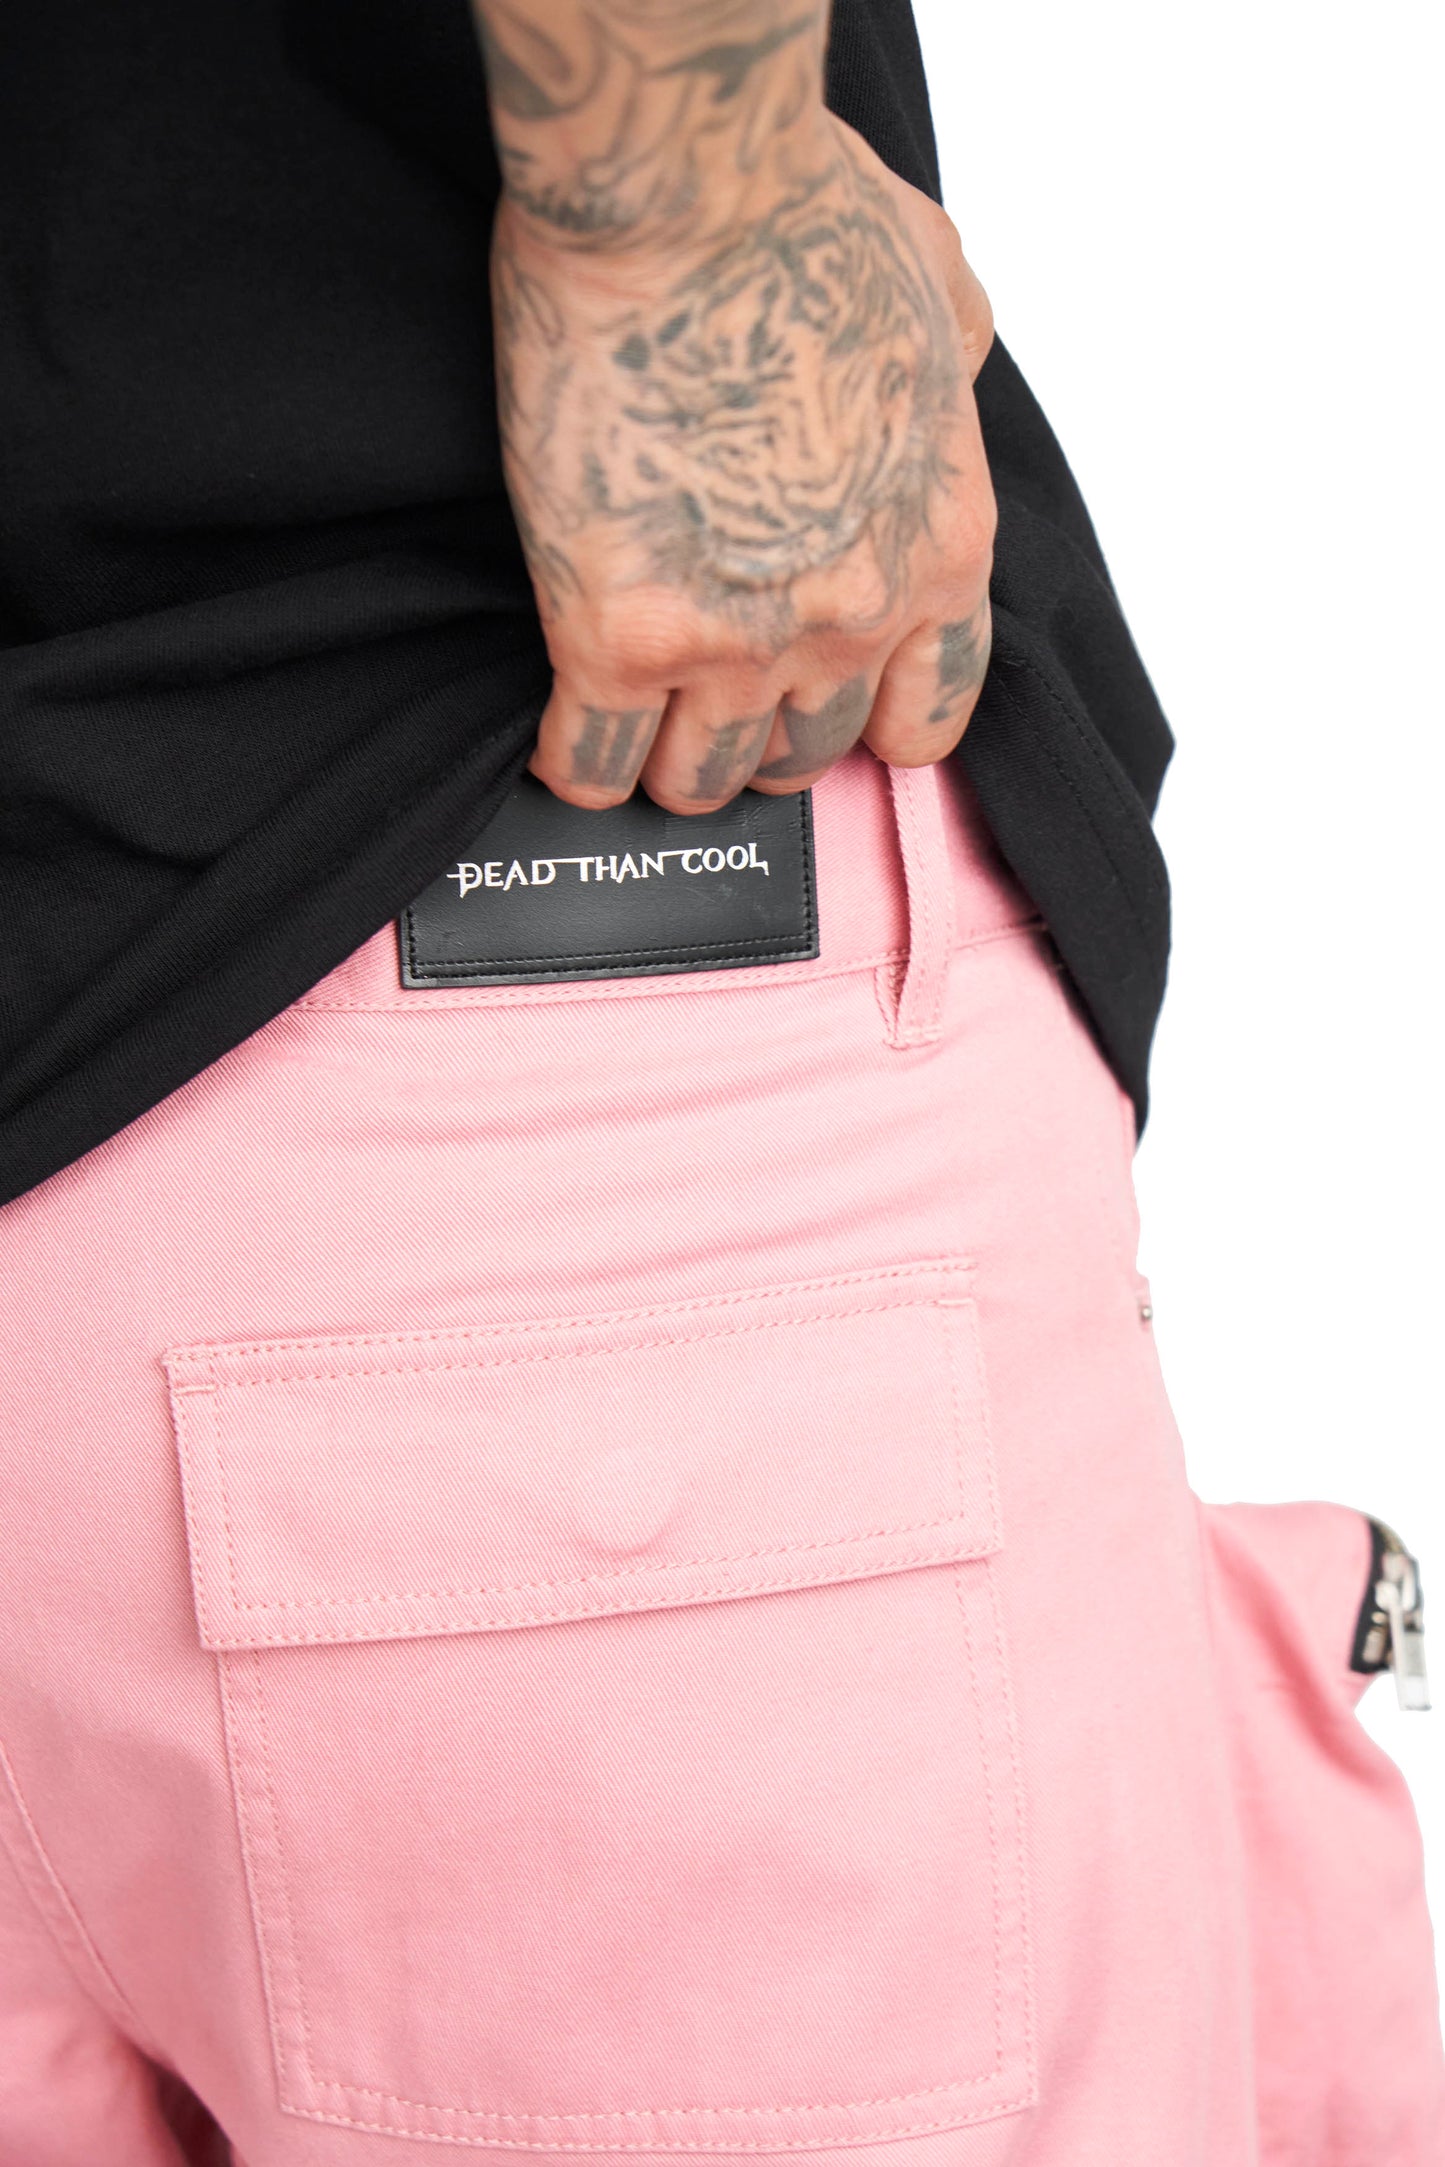 Pink 3D Pocket Cargo Pants